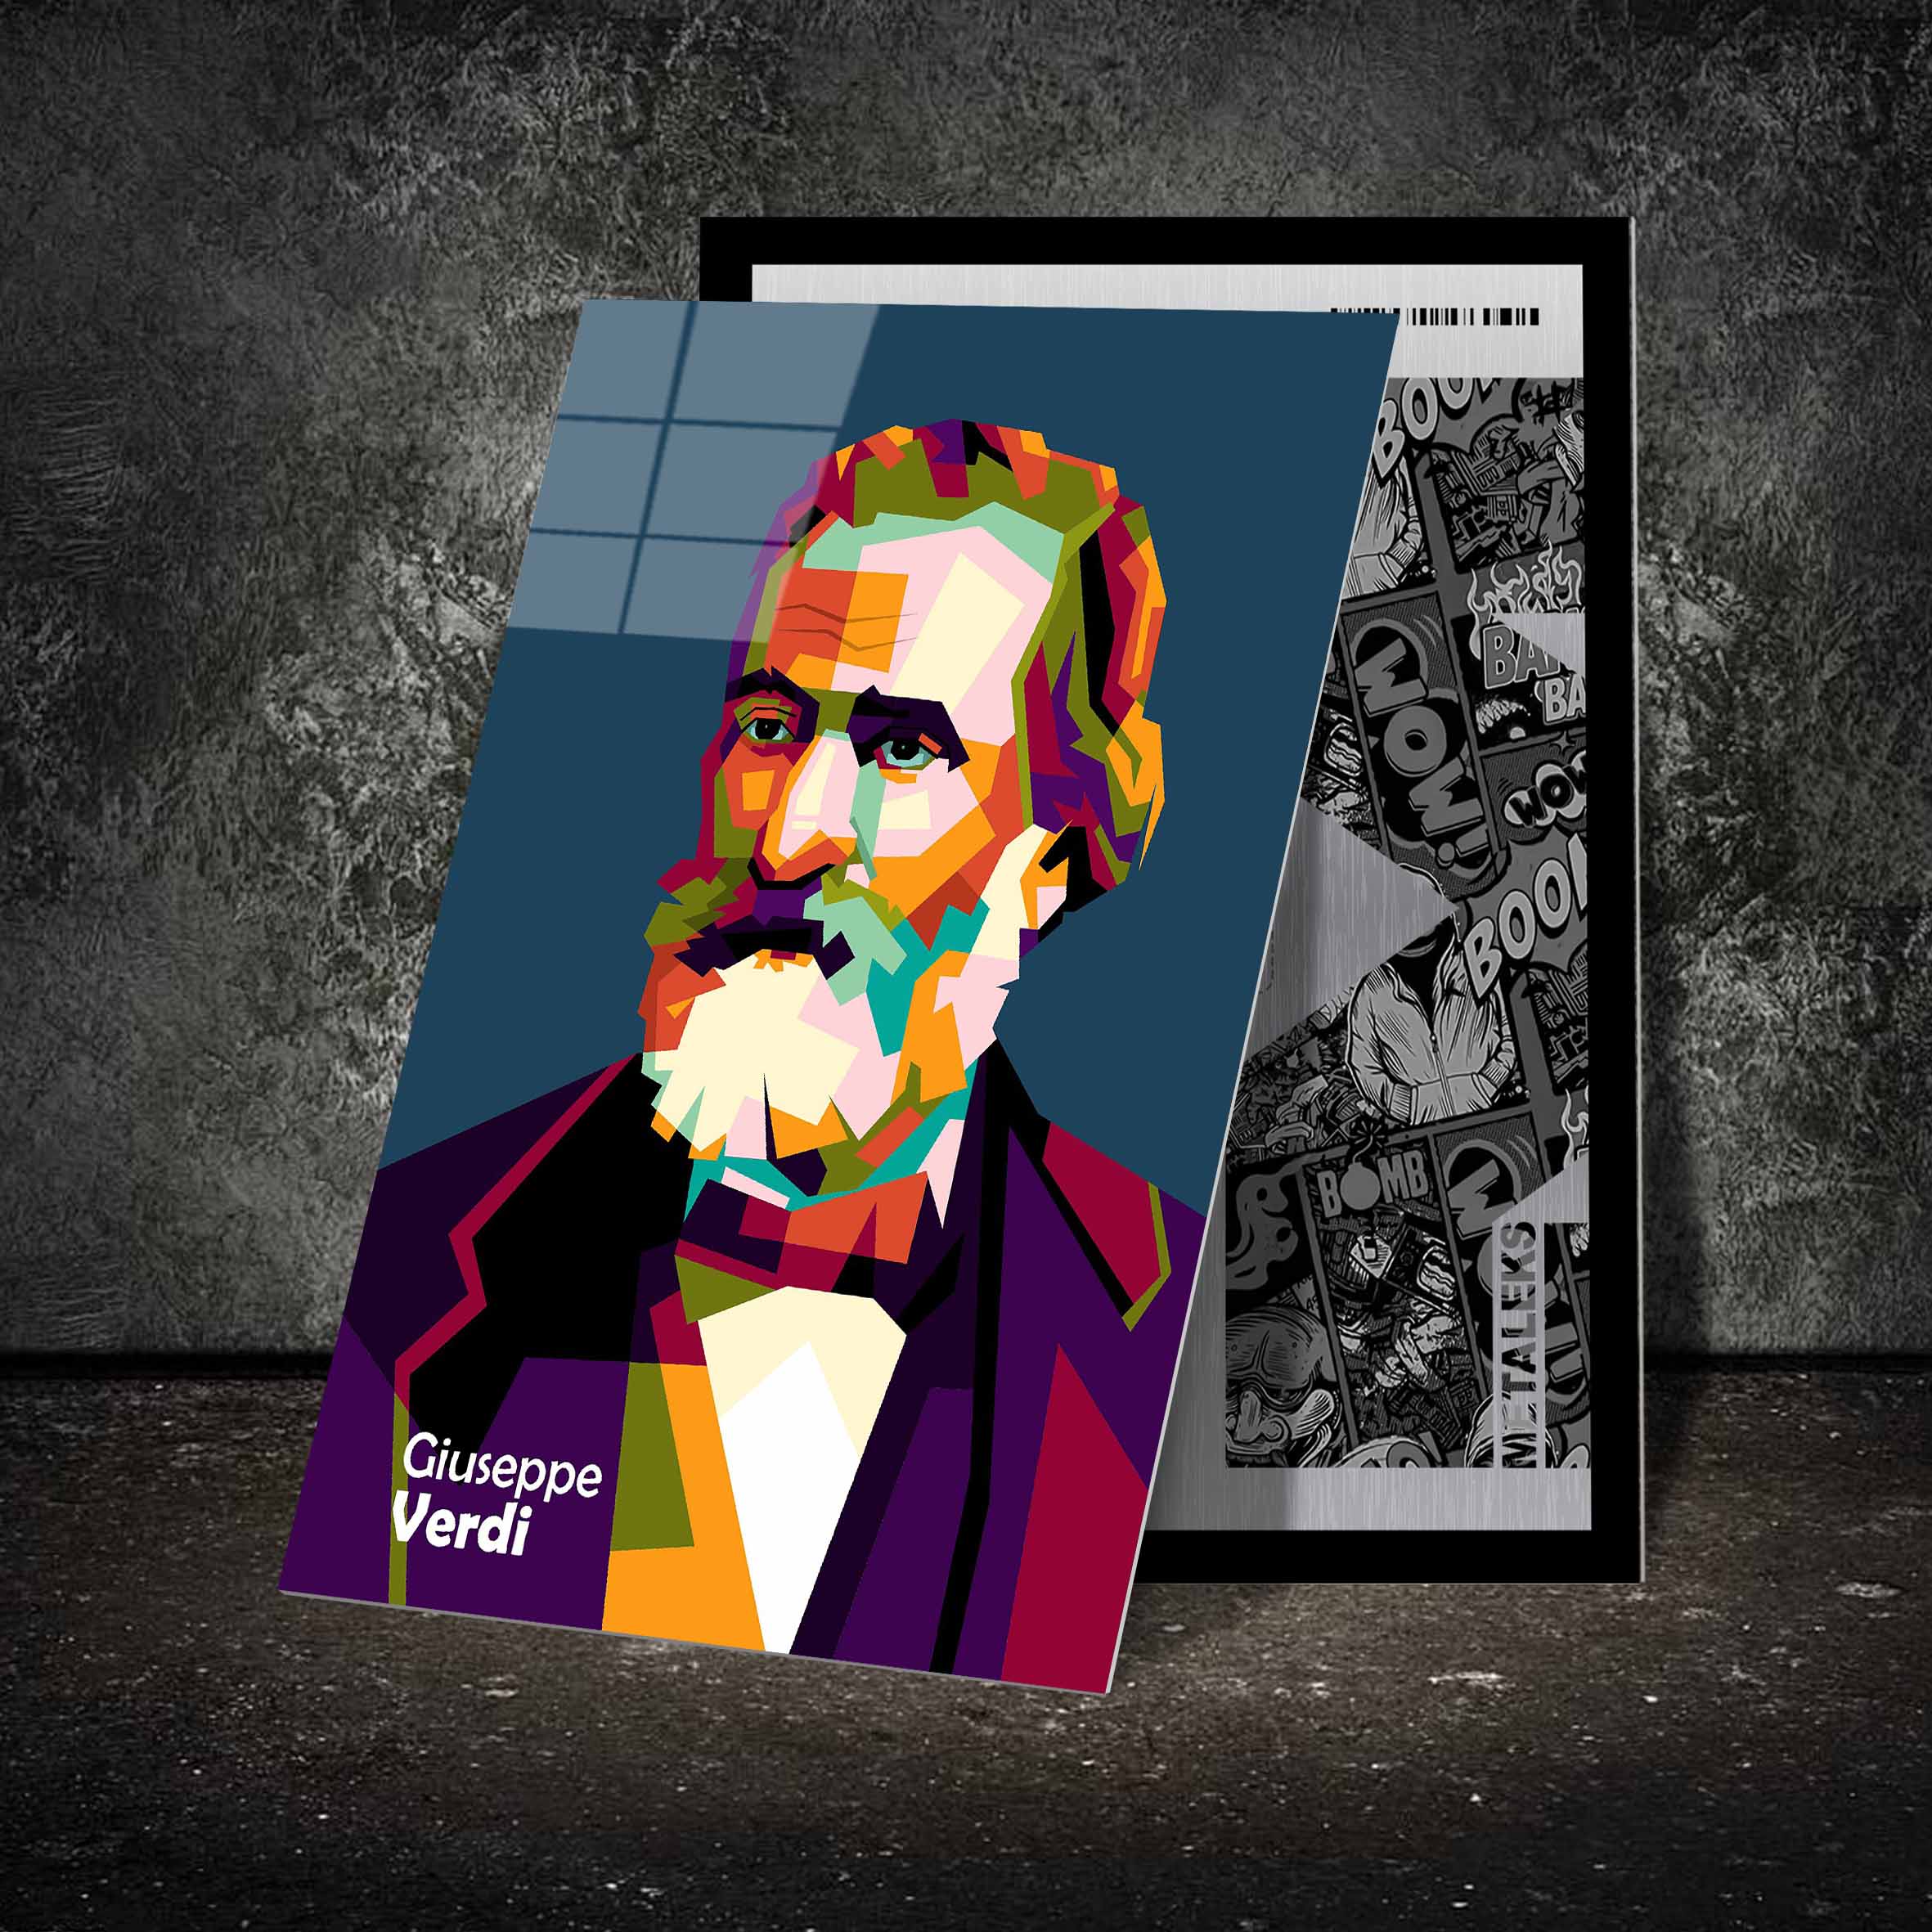 Best componist Giusepper Verdi in amazing illustration-designed by @Amirudin kosong enam